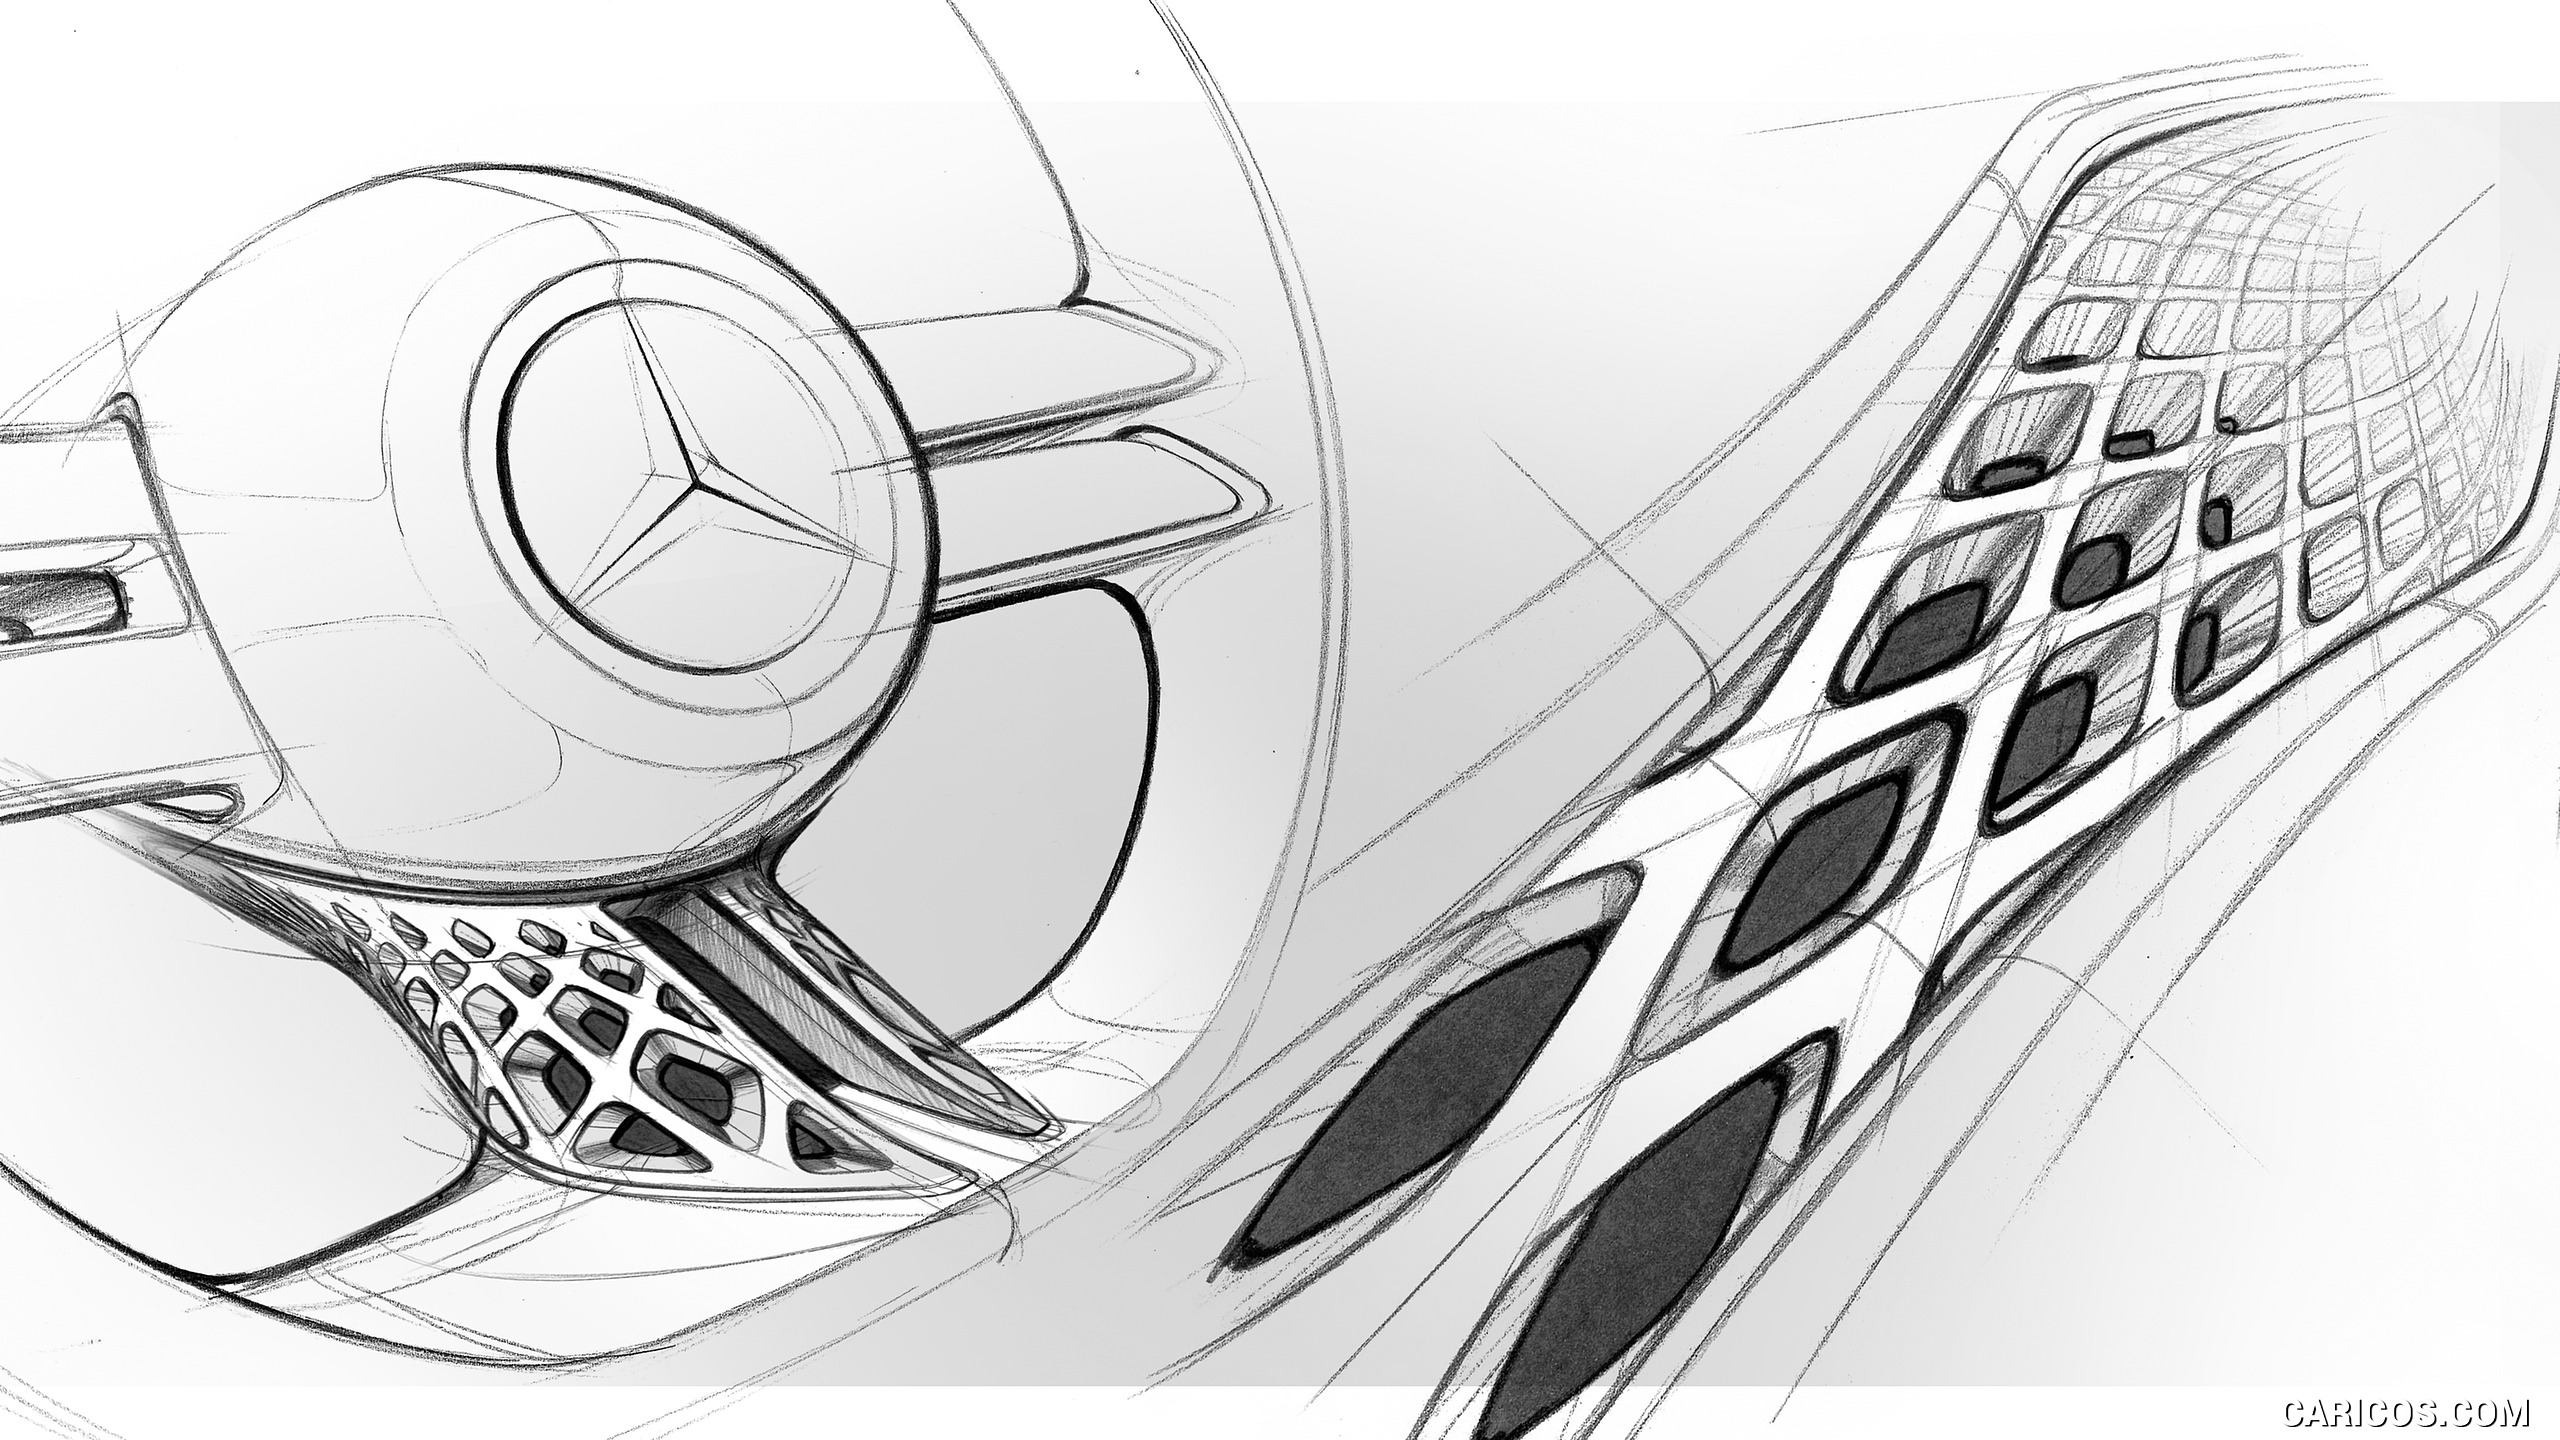 2022 Mercedes-Benz Vision EQXX - Design Sketch, #90 of 146